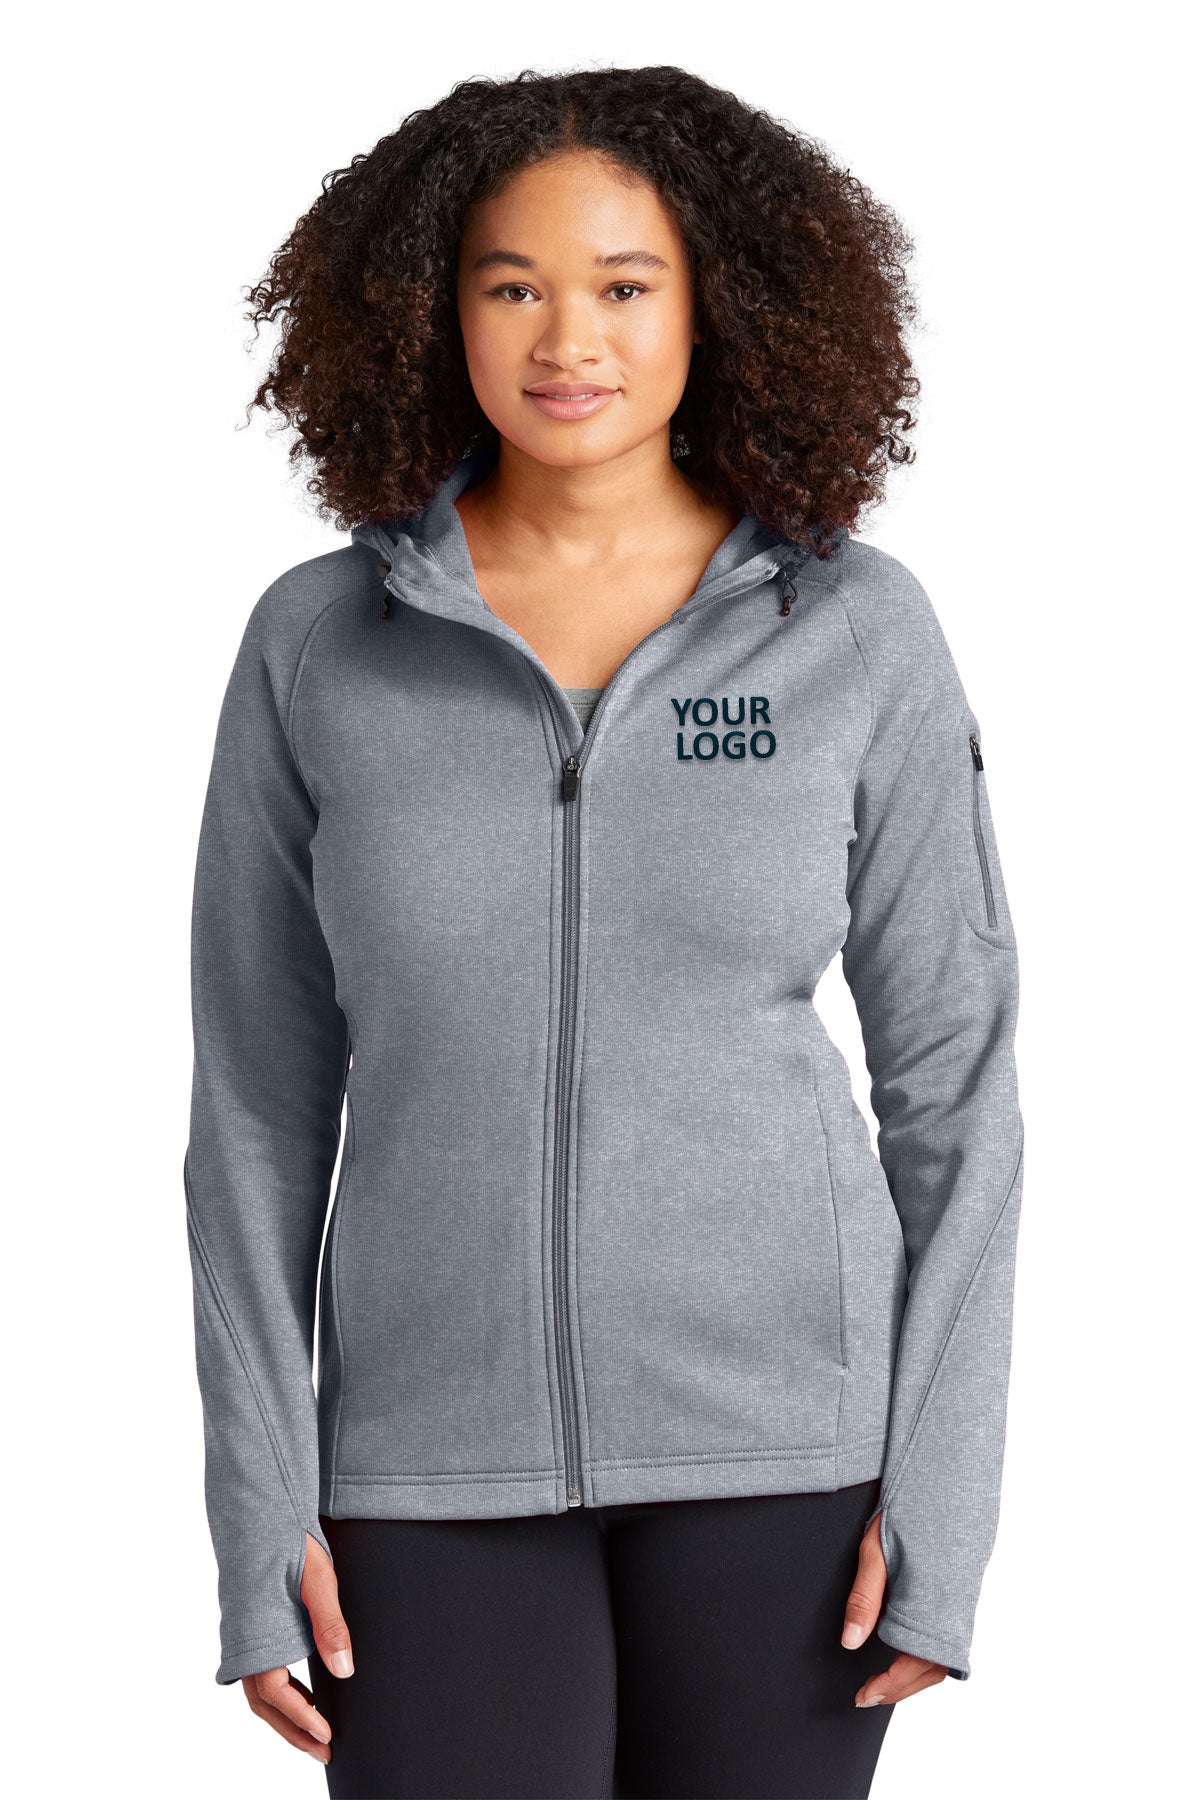 Sport-Tek Ladies Tech Fleece Branded Full-Zip Hooded Jackets, Grey Heather